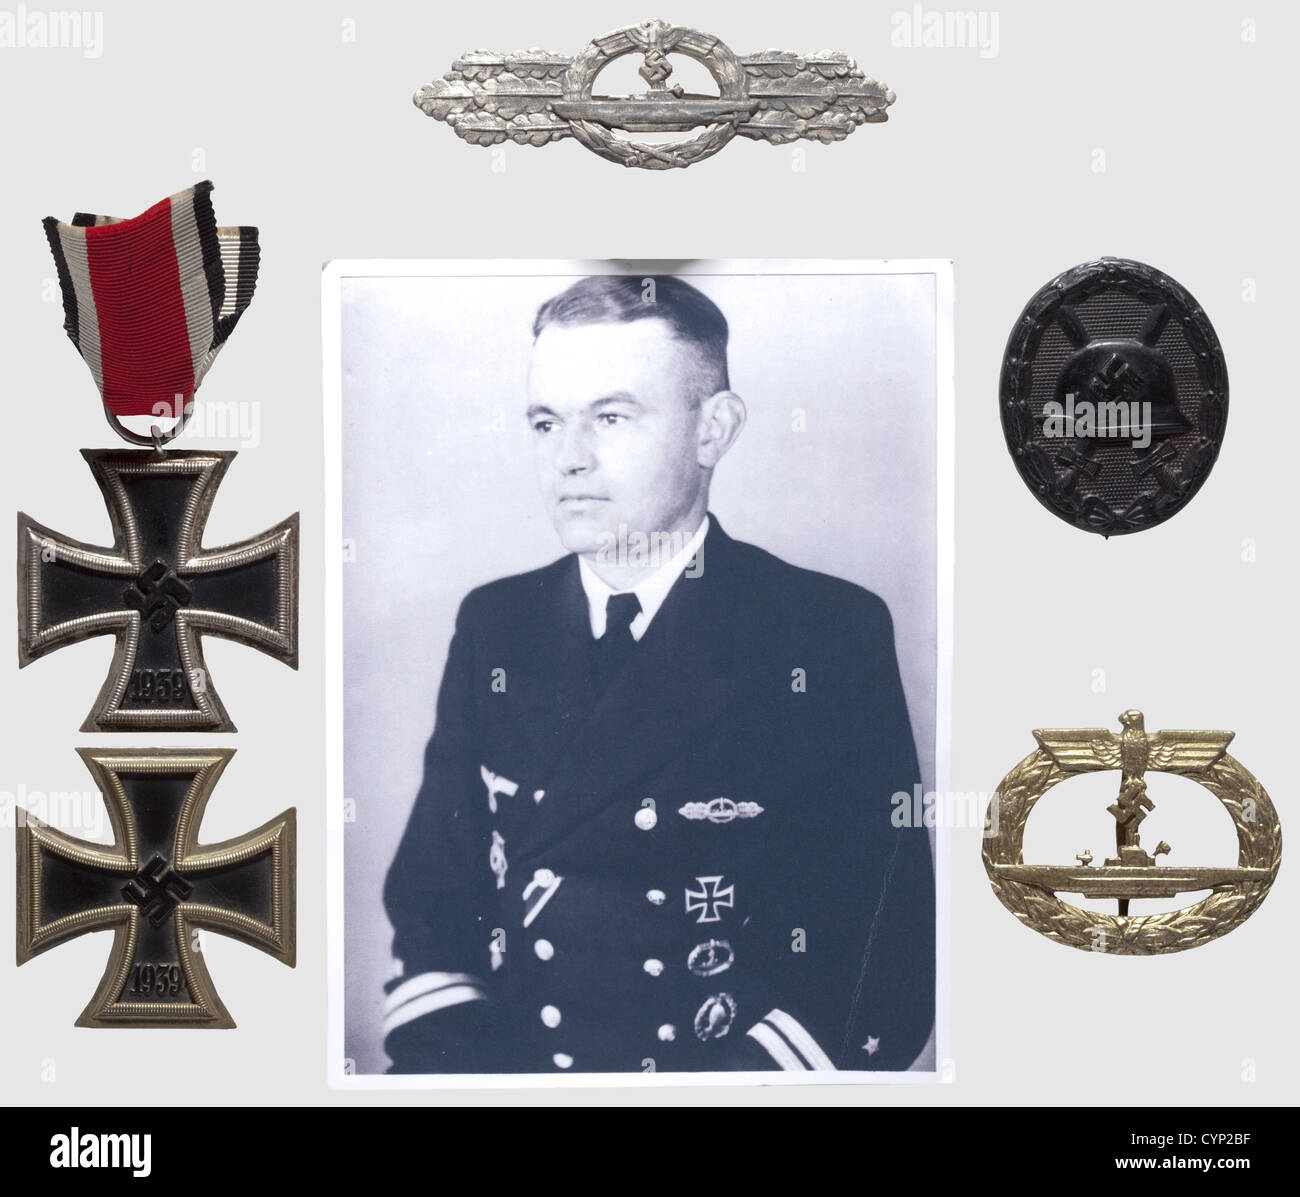 https://c8.alamy.com/comp/CYP2BF/awards-and-documents-of-u-boat-commander-oltzs-heinrich-niemeyer-u-CYP2BF.jpg